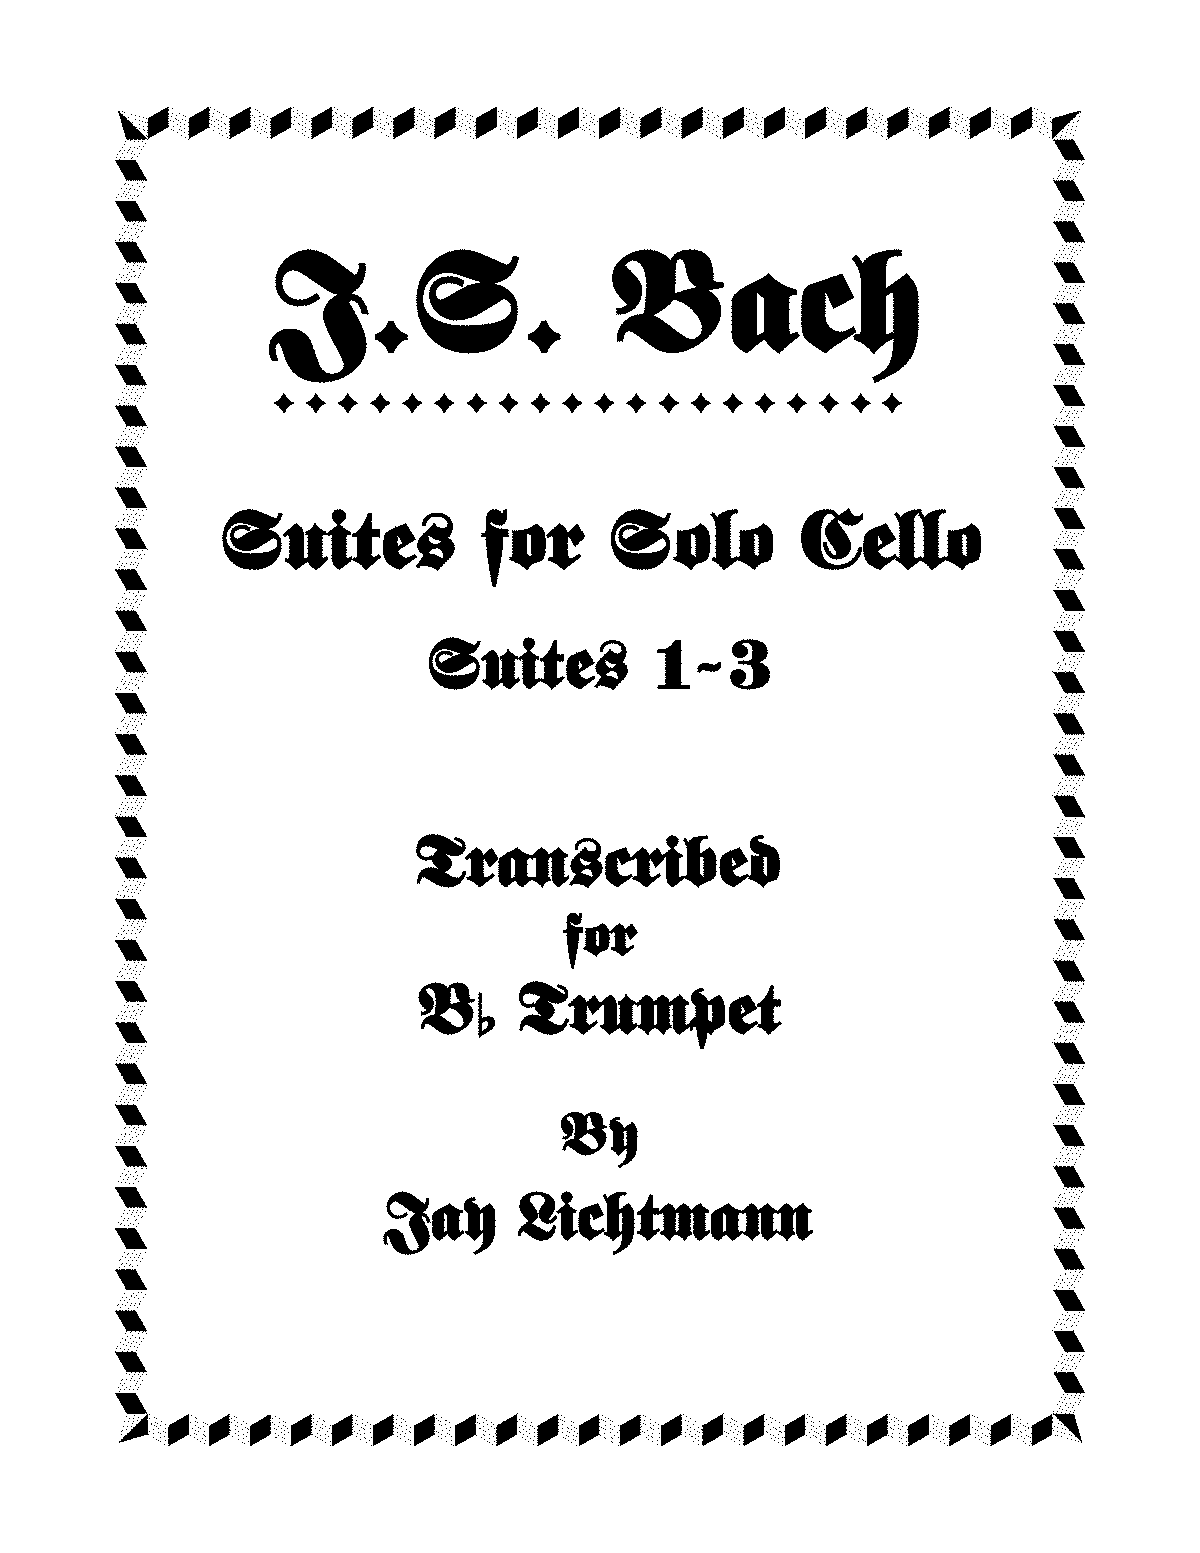 bach cello suite 2 guitar pdf lesson